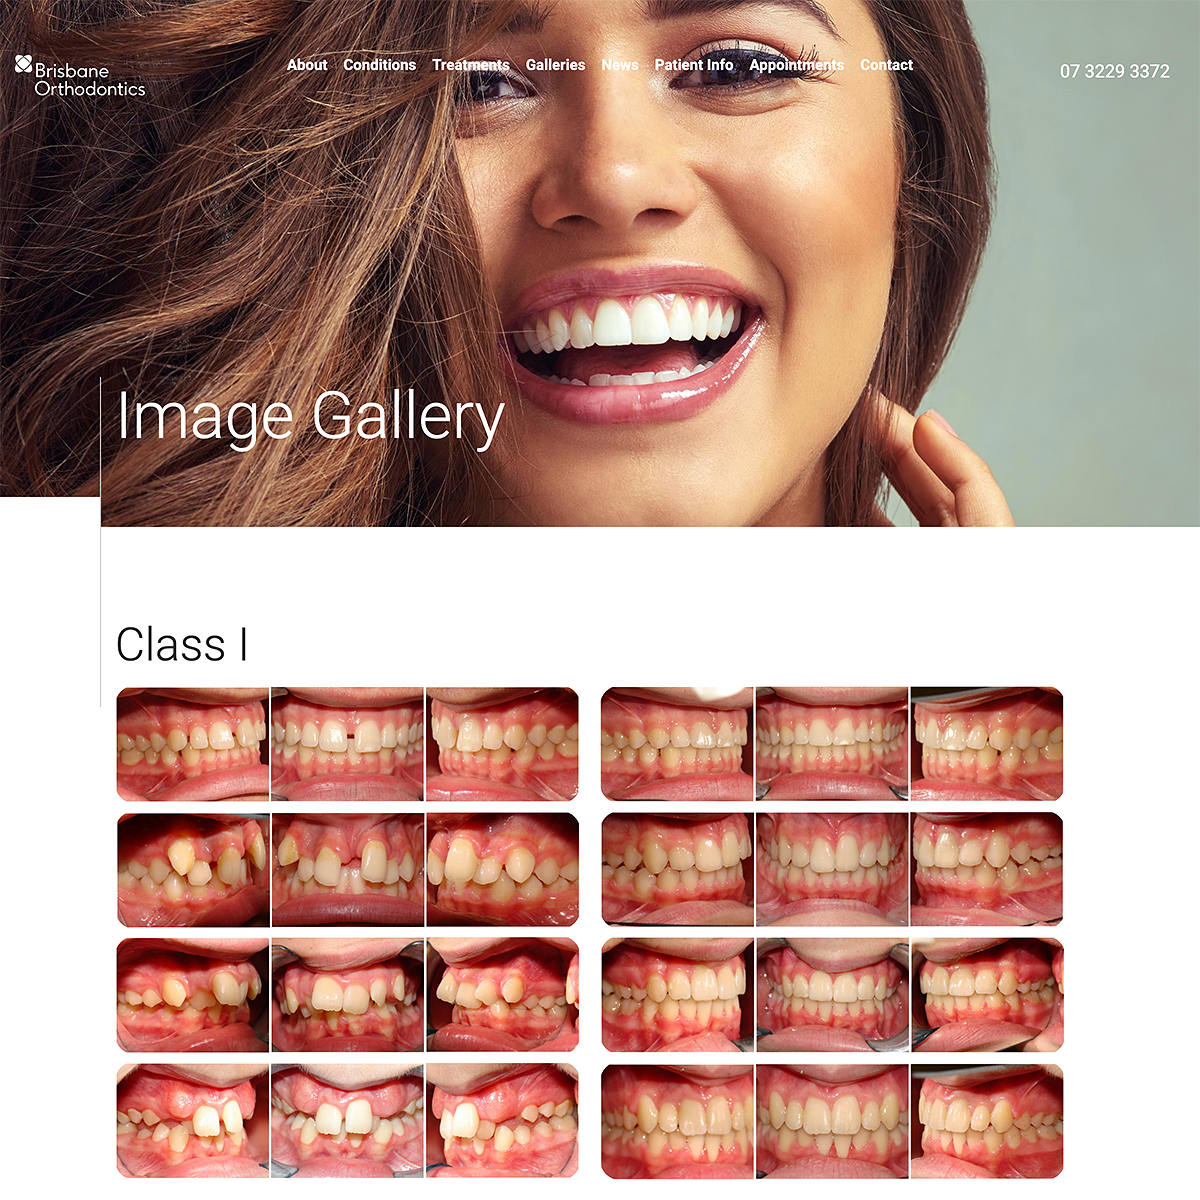 Brisbane Orthodontics - Image Gallery